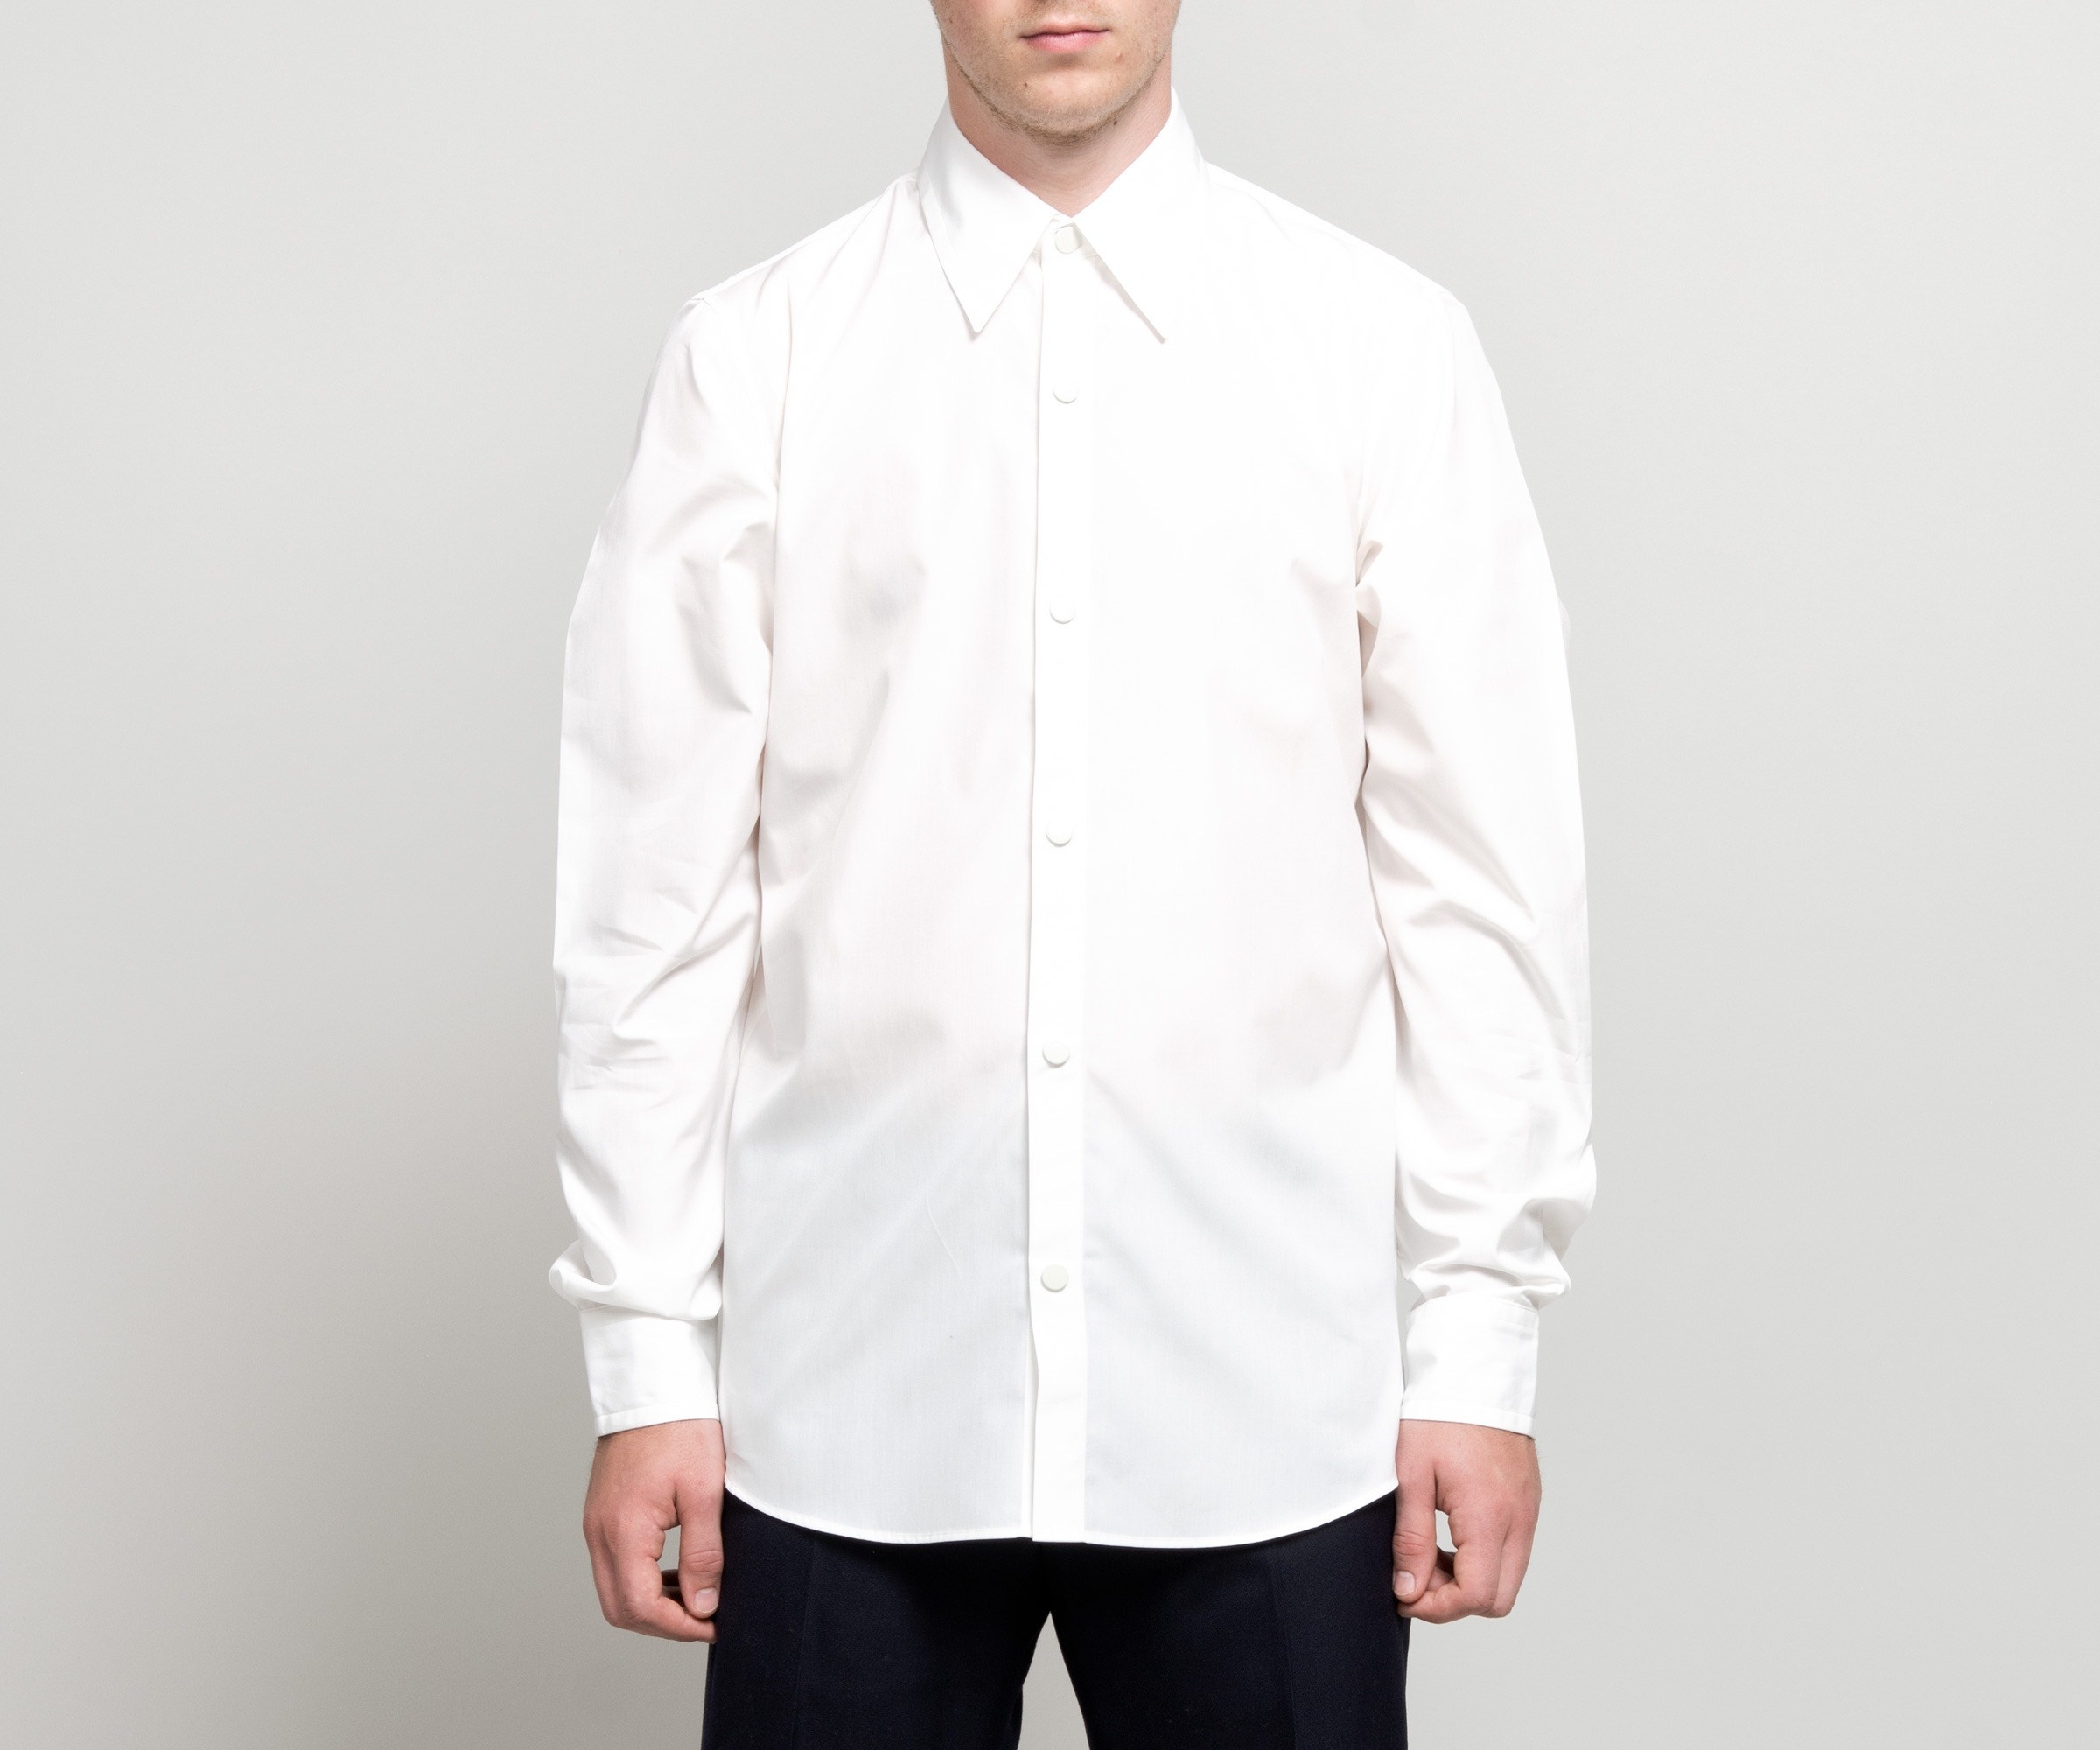 Dries Van Noten 'Pop Stud' Shirt White